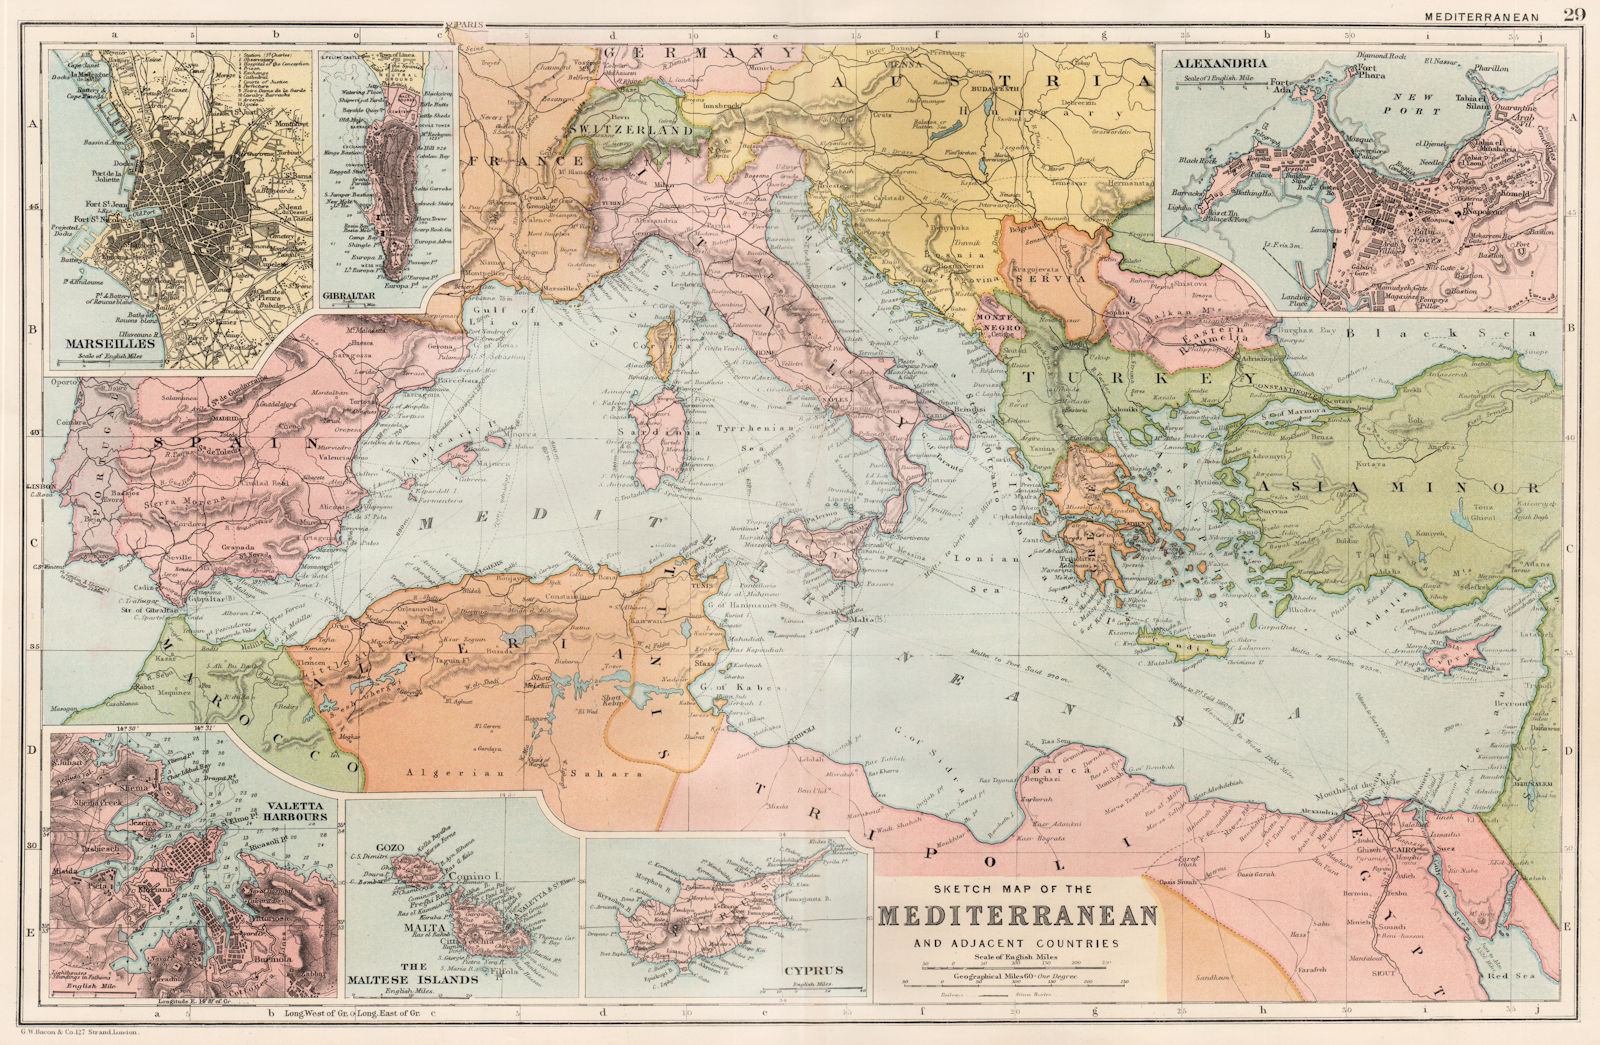 MEDITERRANEAN. Marseilles Gibraltar Valetta Malta Cyprus Alexandria 1893 map